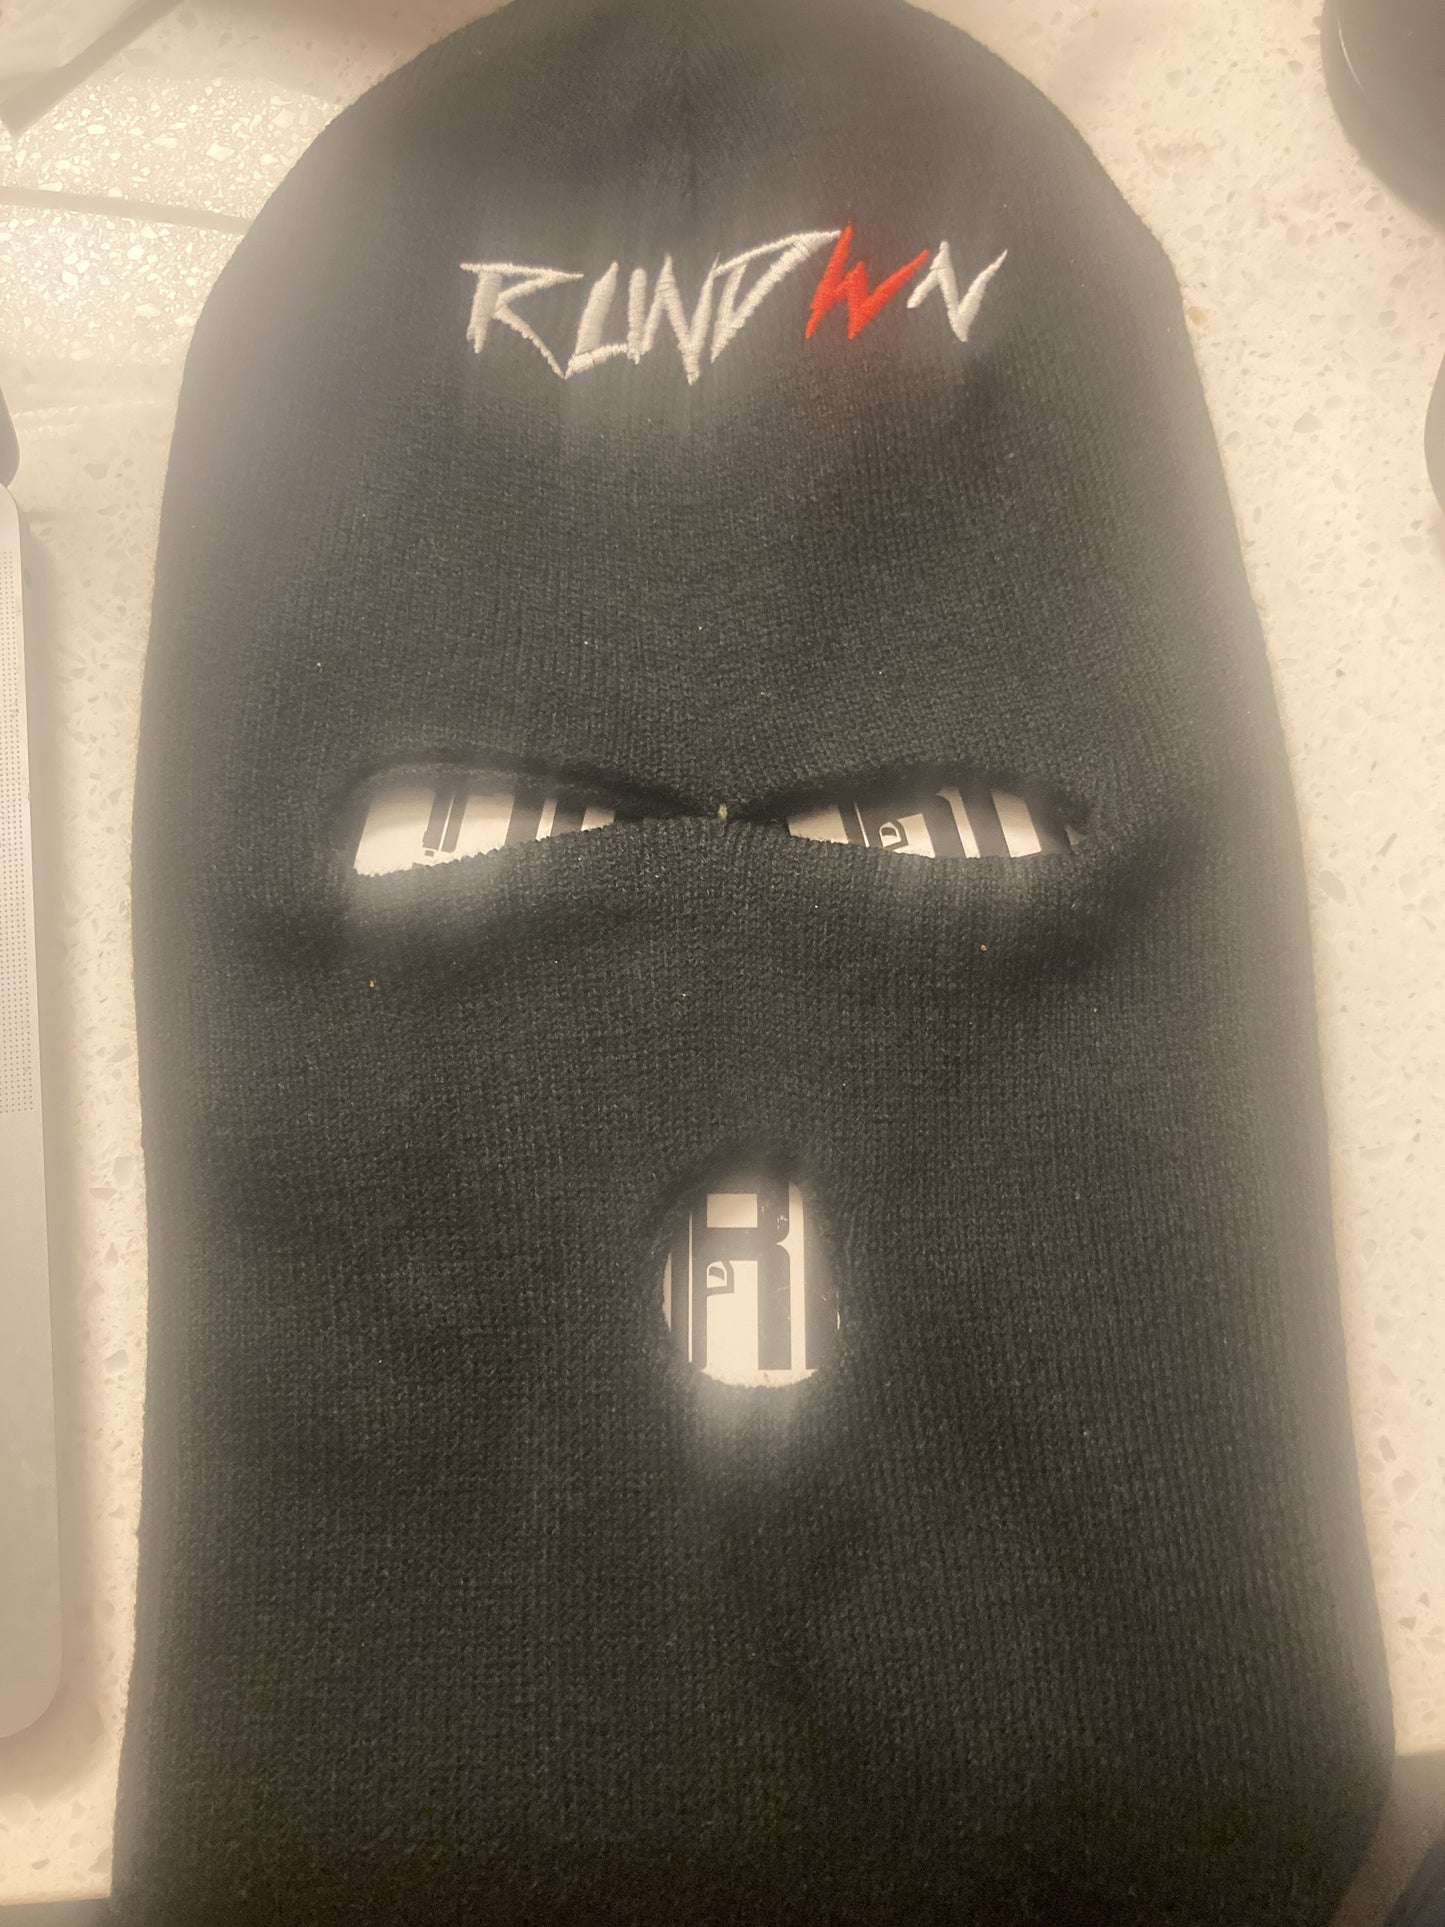 Rundwn Ski Mask